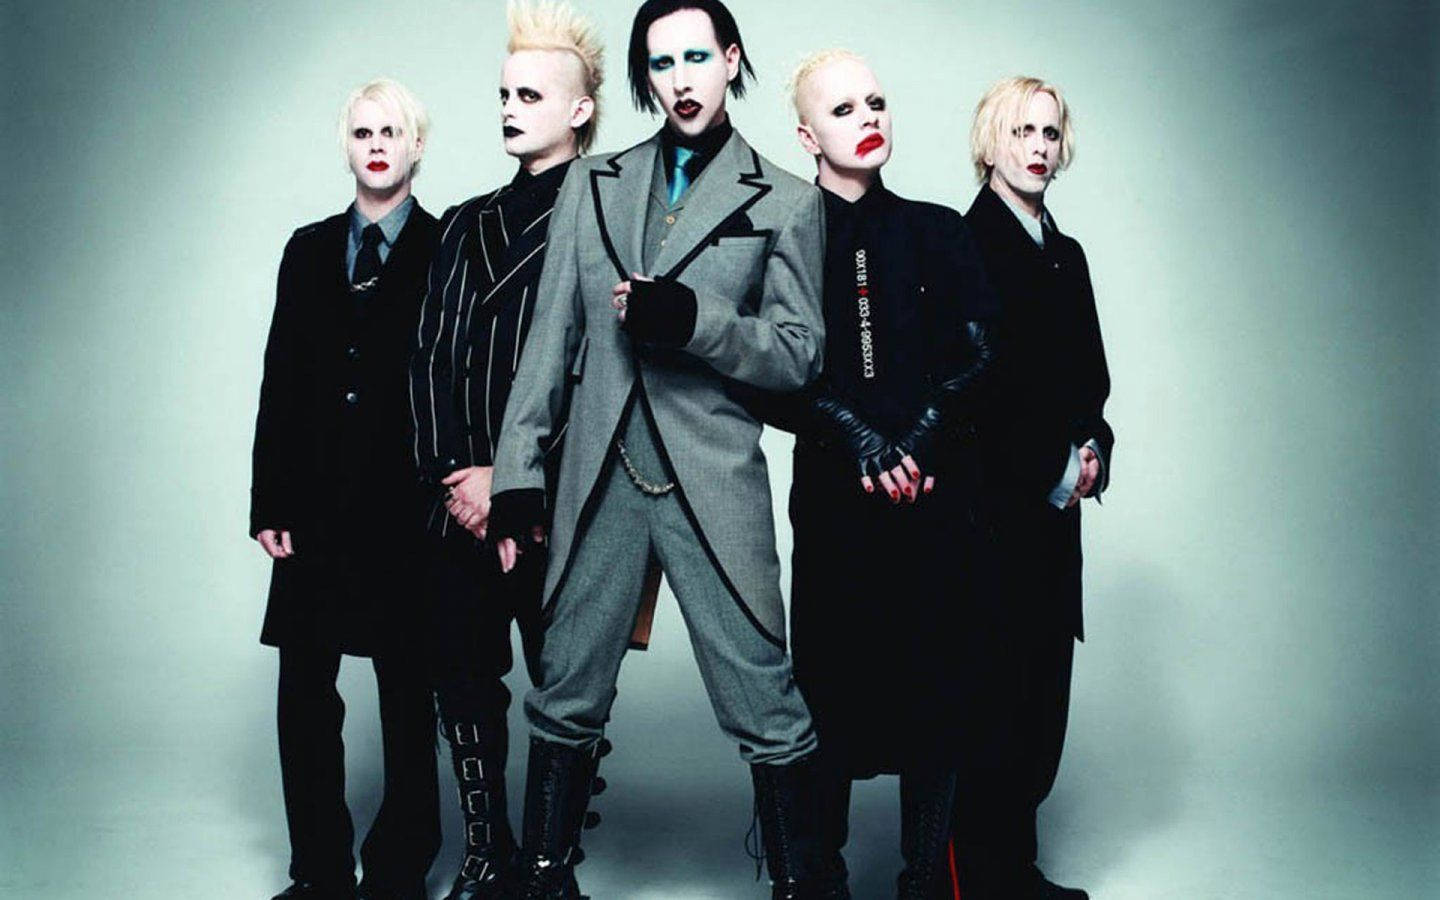 Singer-songwriter Marilyn Manson goes against the grain of popular culture Wallpaper